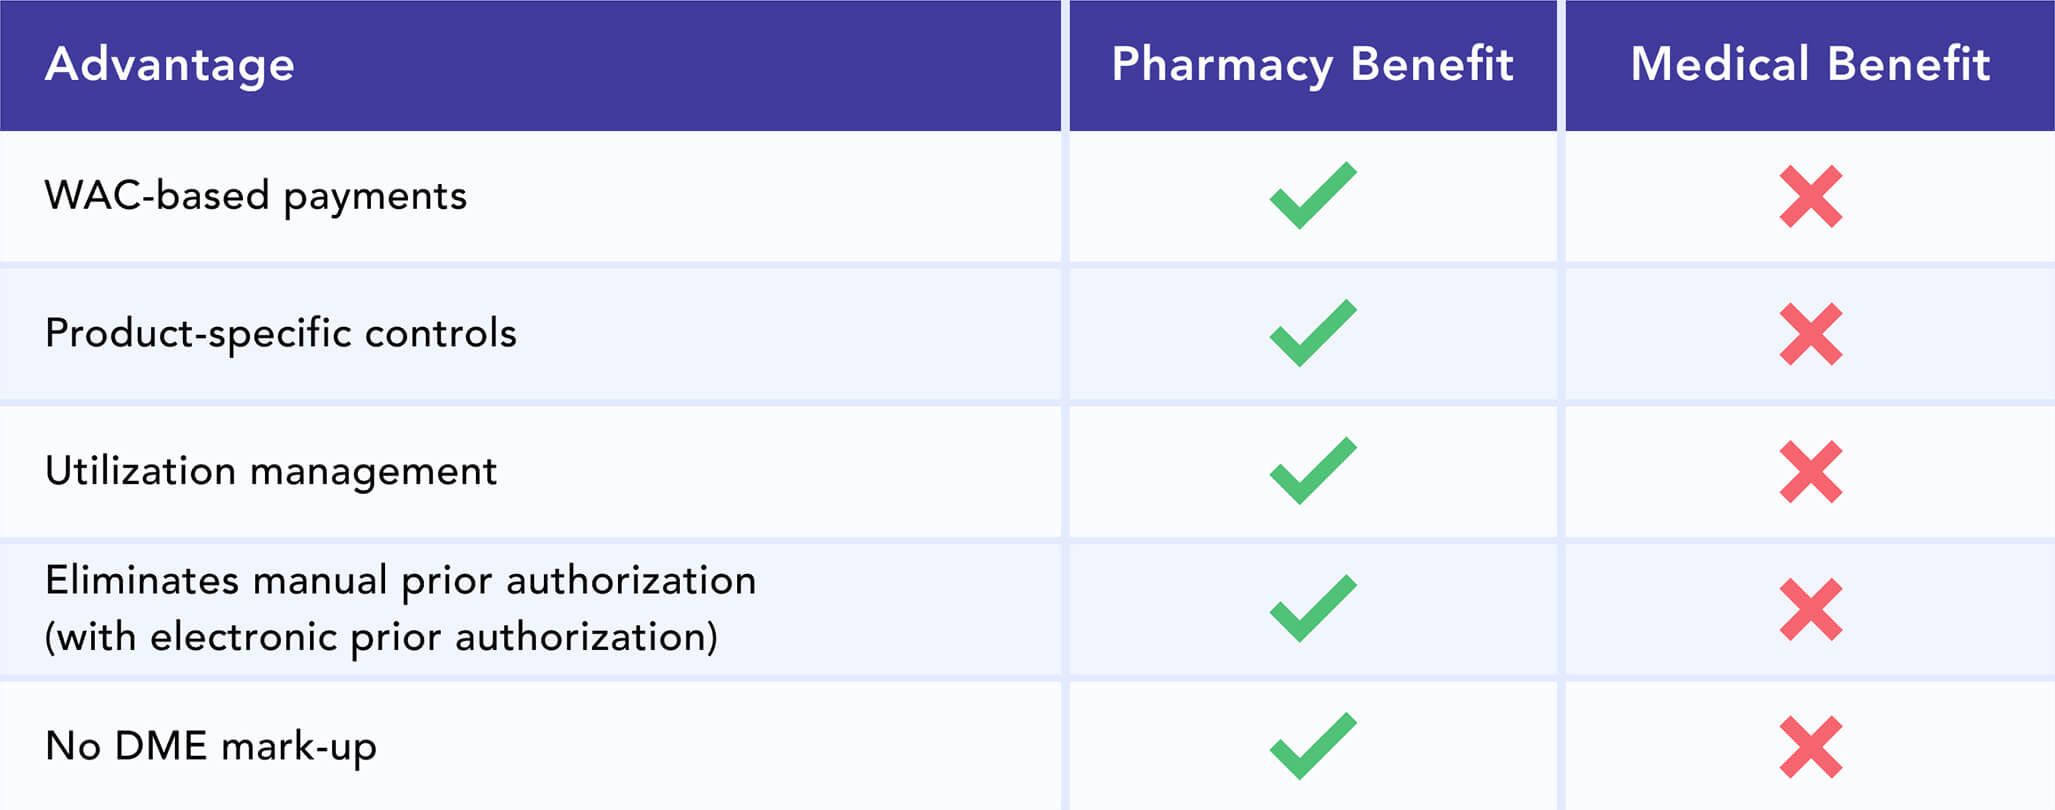 Pharmacy Benefit Advantages Chart